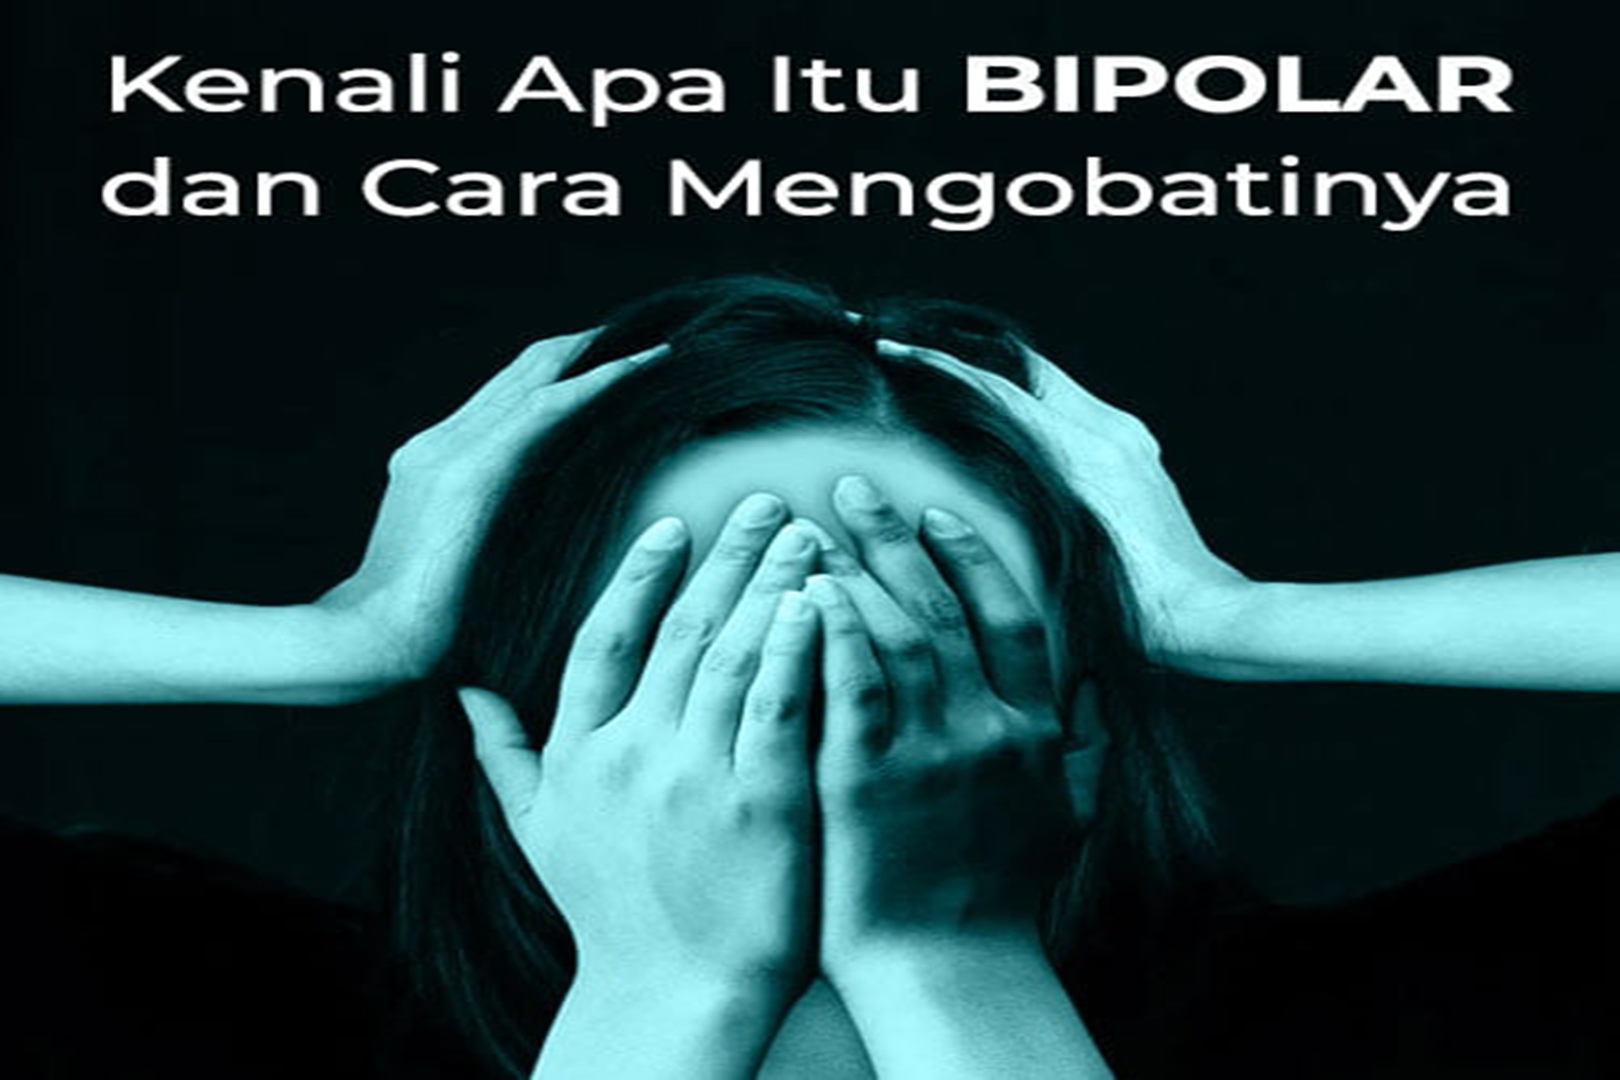 Mengenal Bipolar Disorder Dan Cara Pengobatannya, Orang Tua dan Kaum Remaja Wajib Tau!